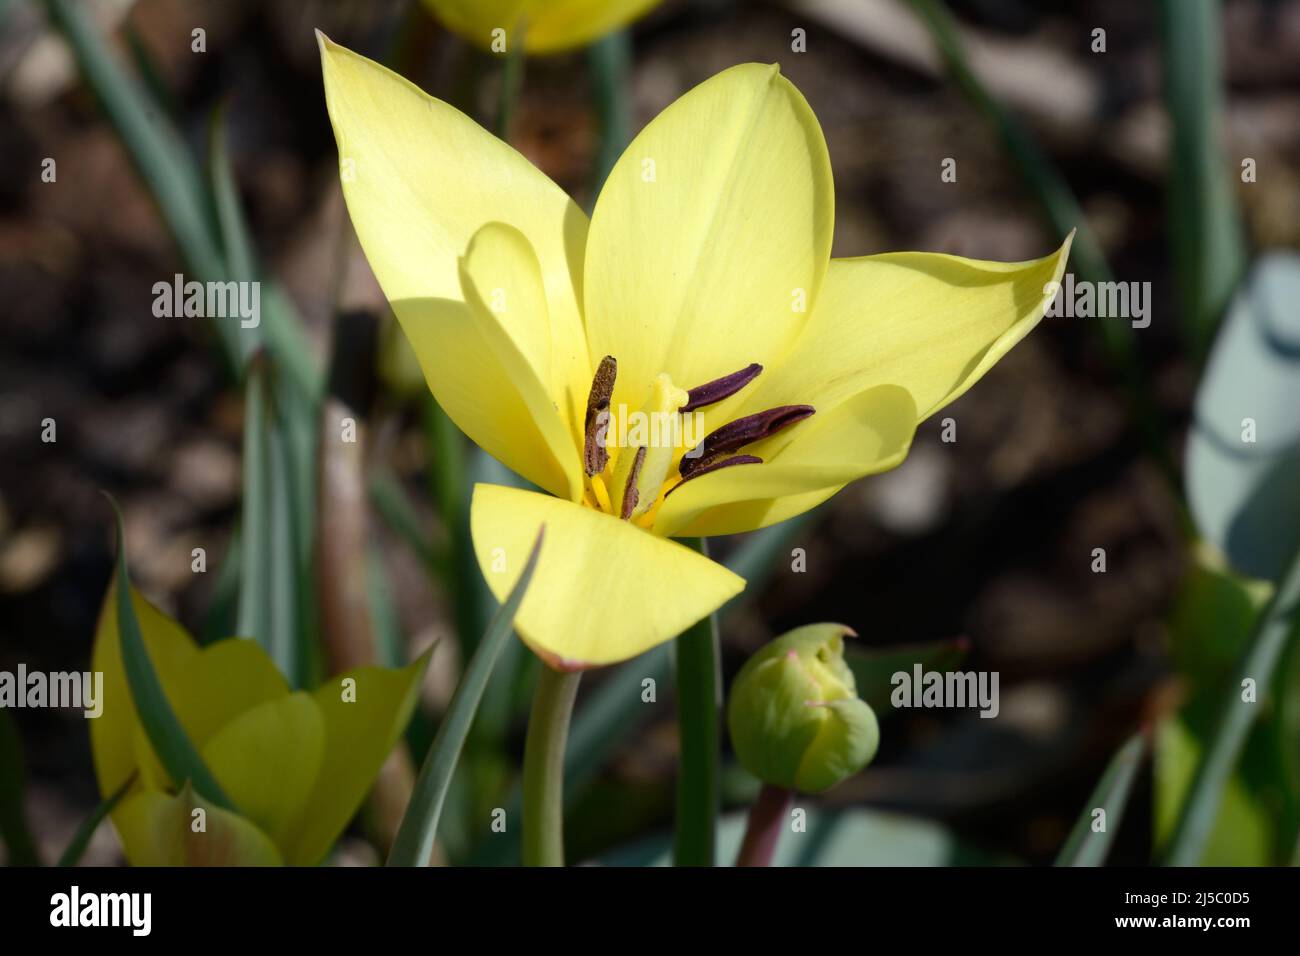 Tulipa Honky-Tonk Tilip Honky Tonk soft yellow tulip flower with grey green leaves Stock Photo